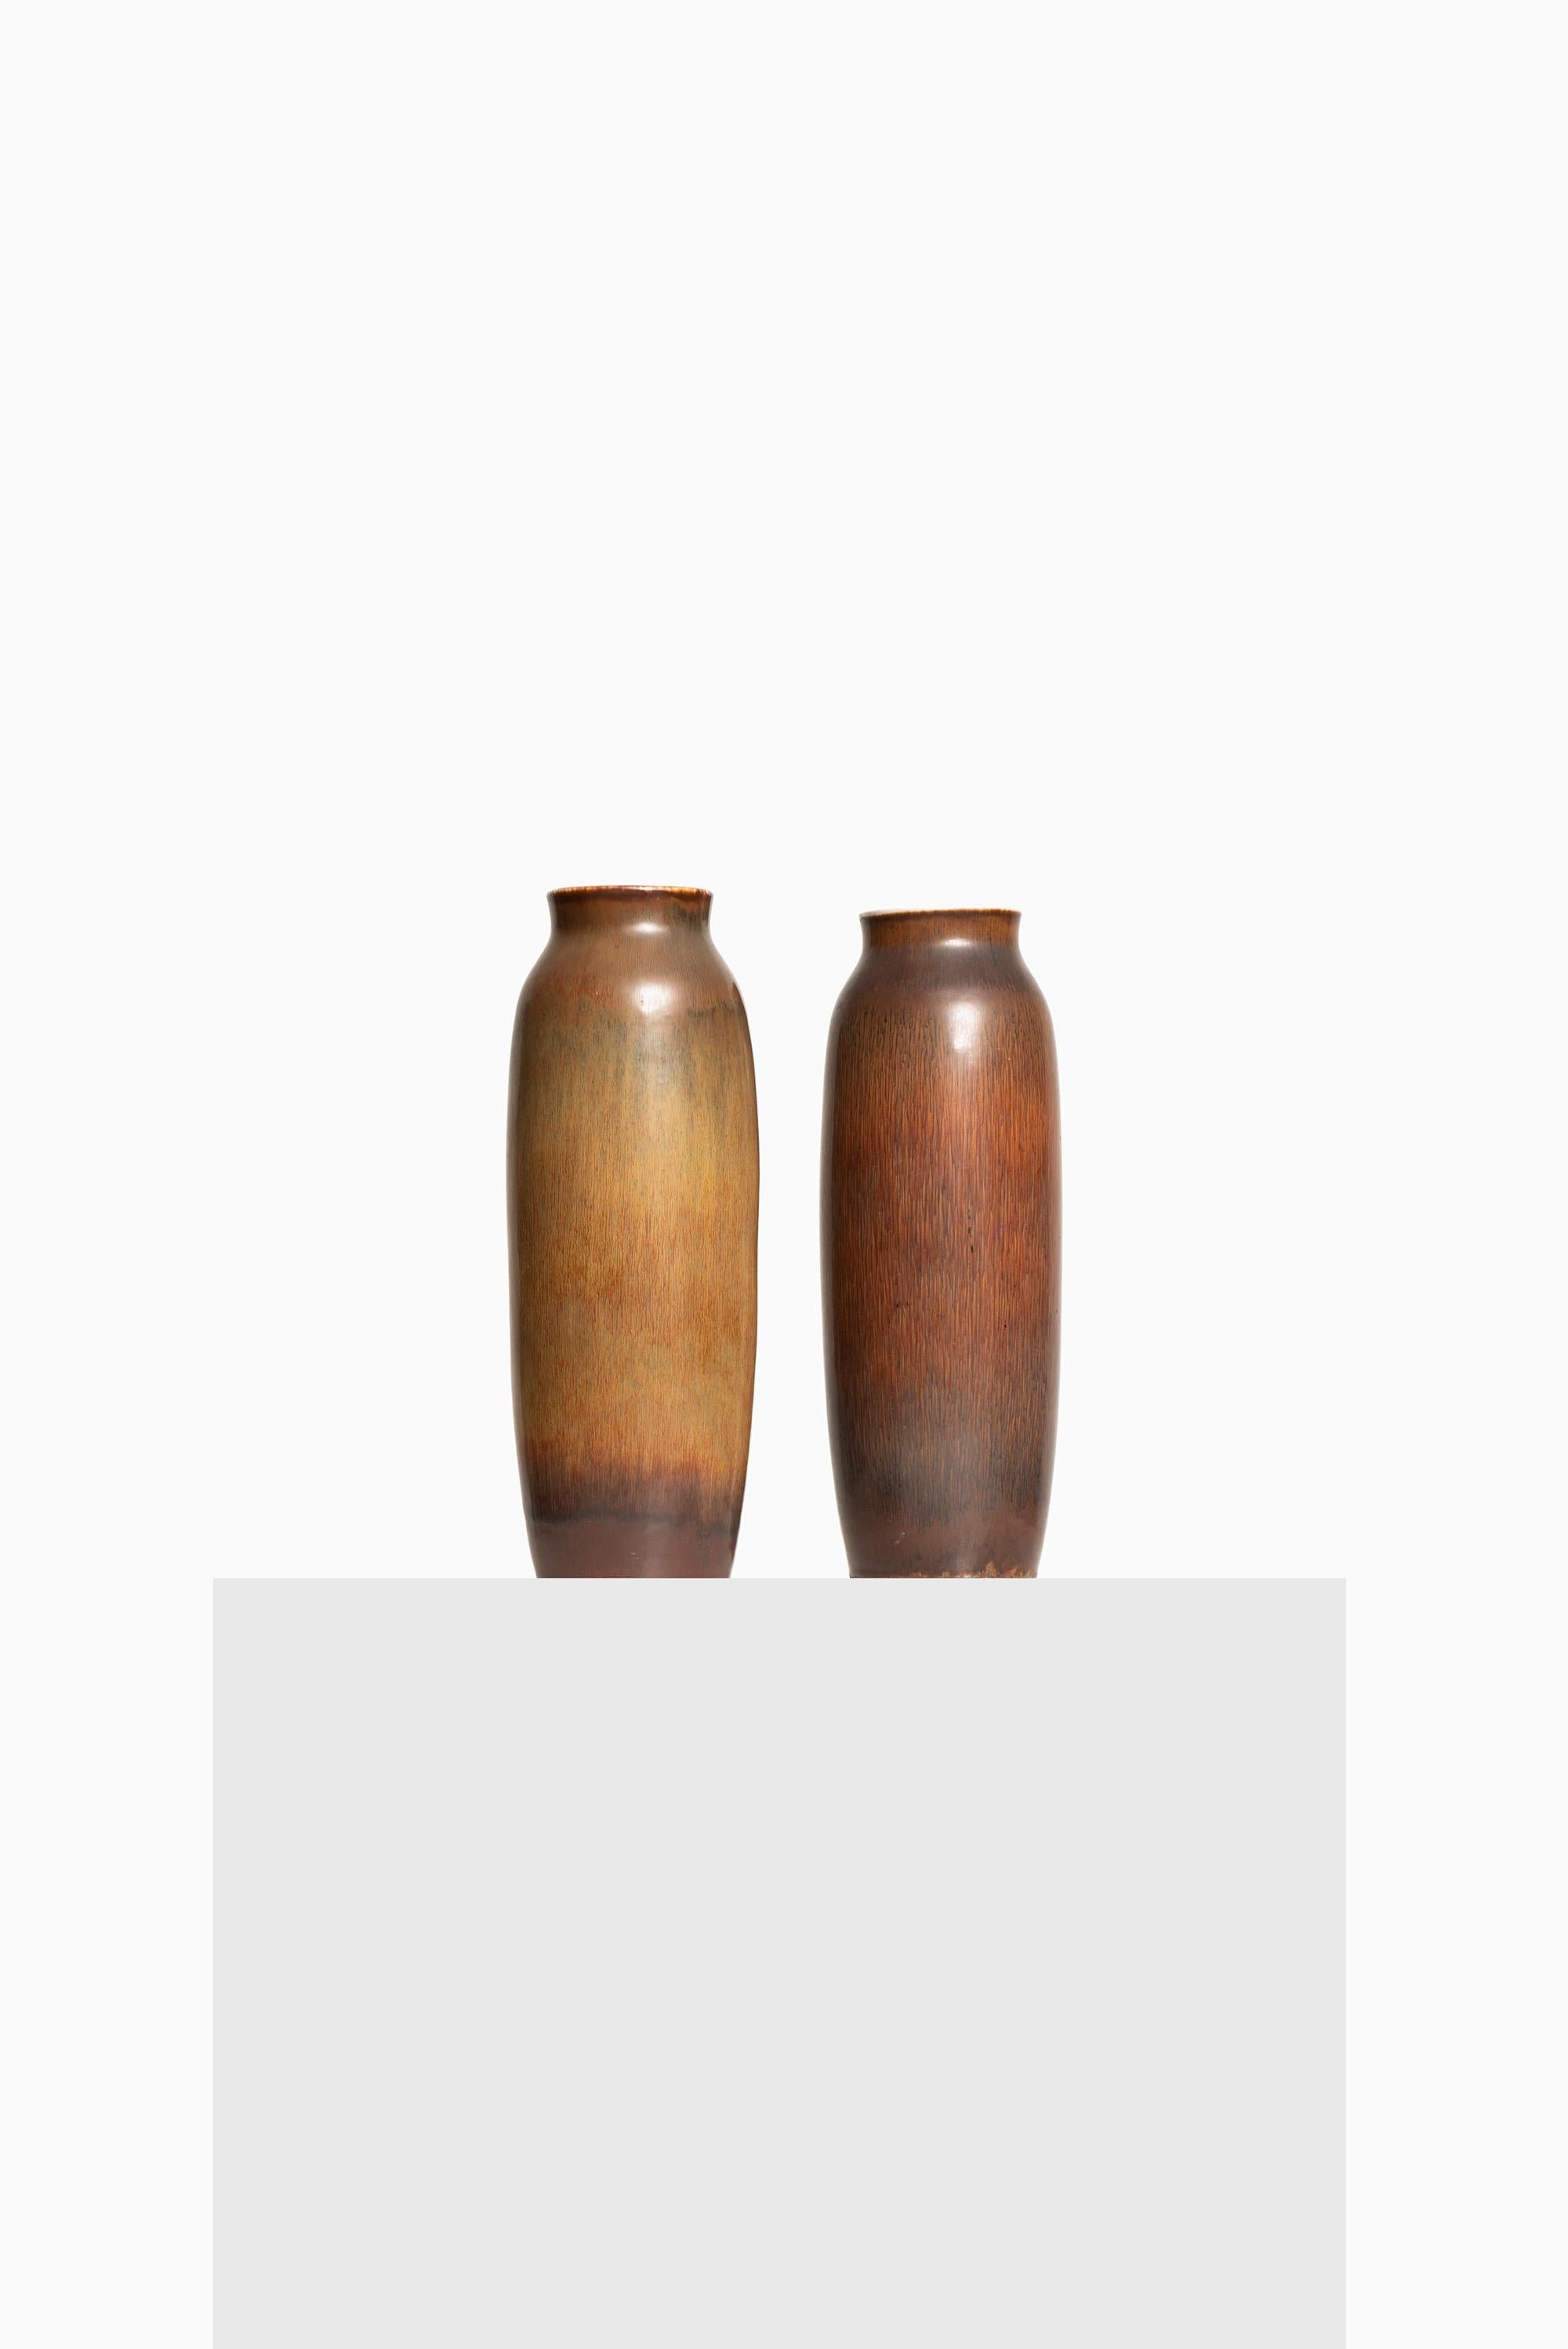 Ceramic vase designed by Carl-Harry Stålhane. Produced by Rörstrand in Sweden.